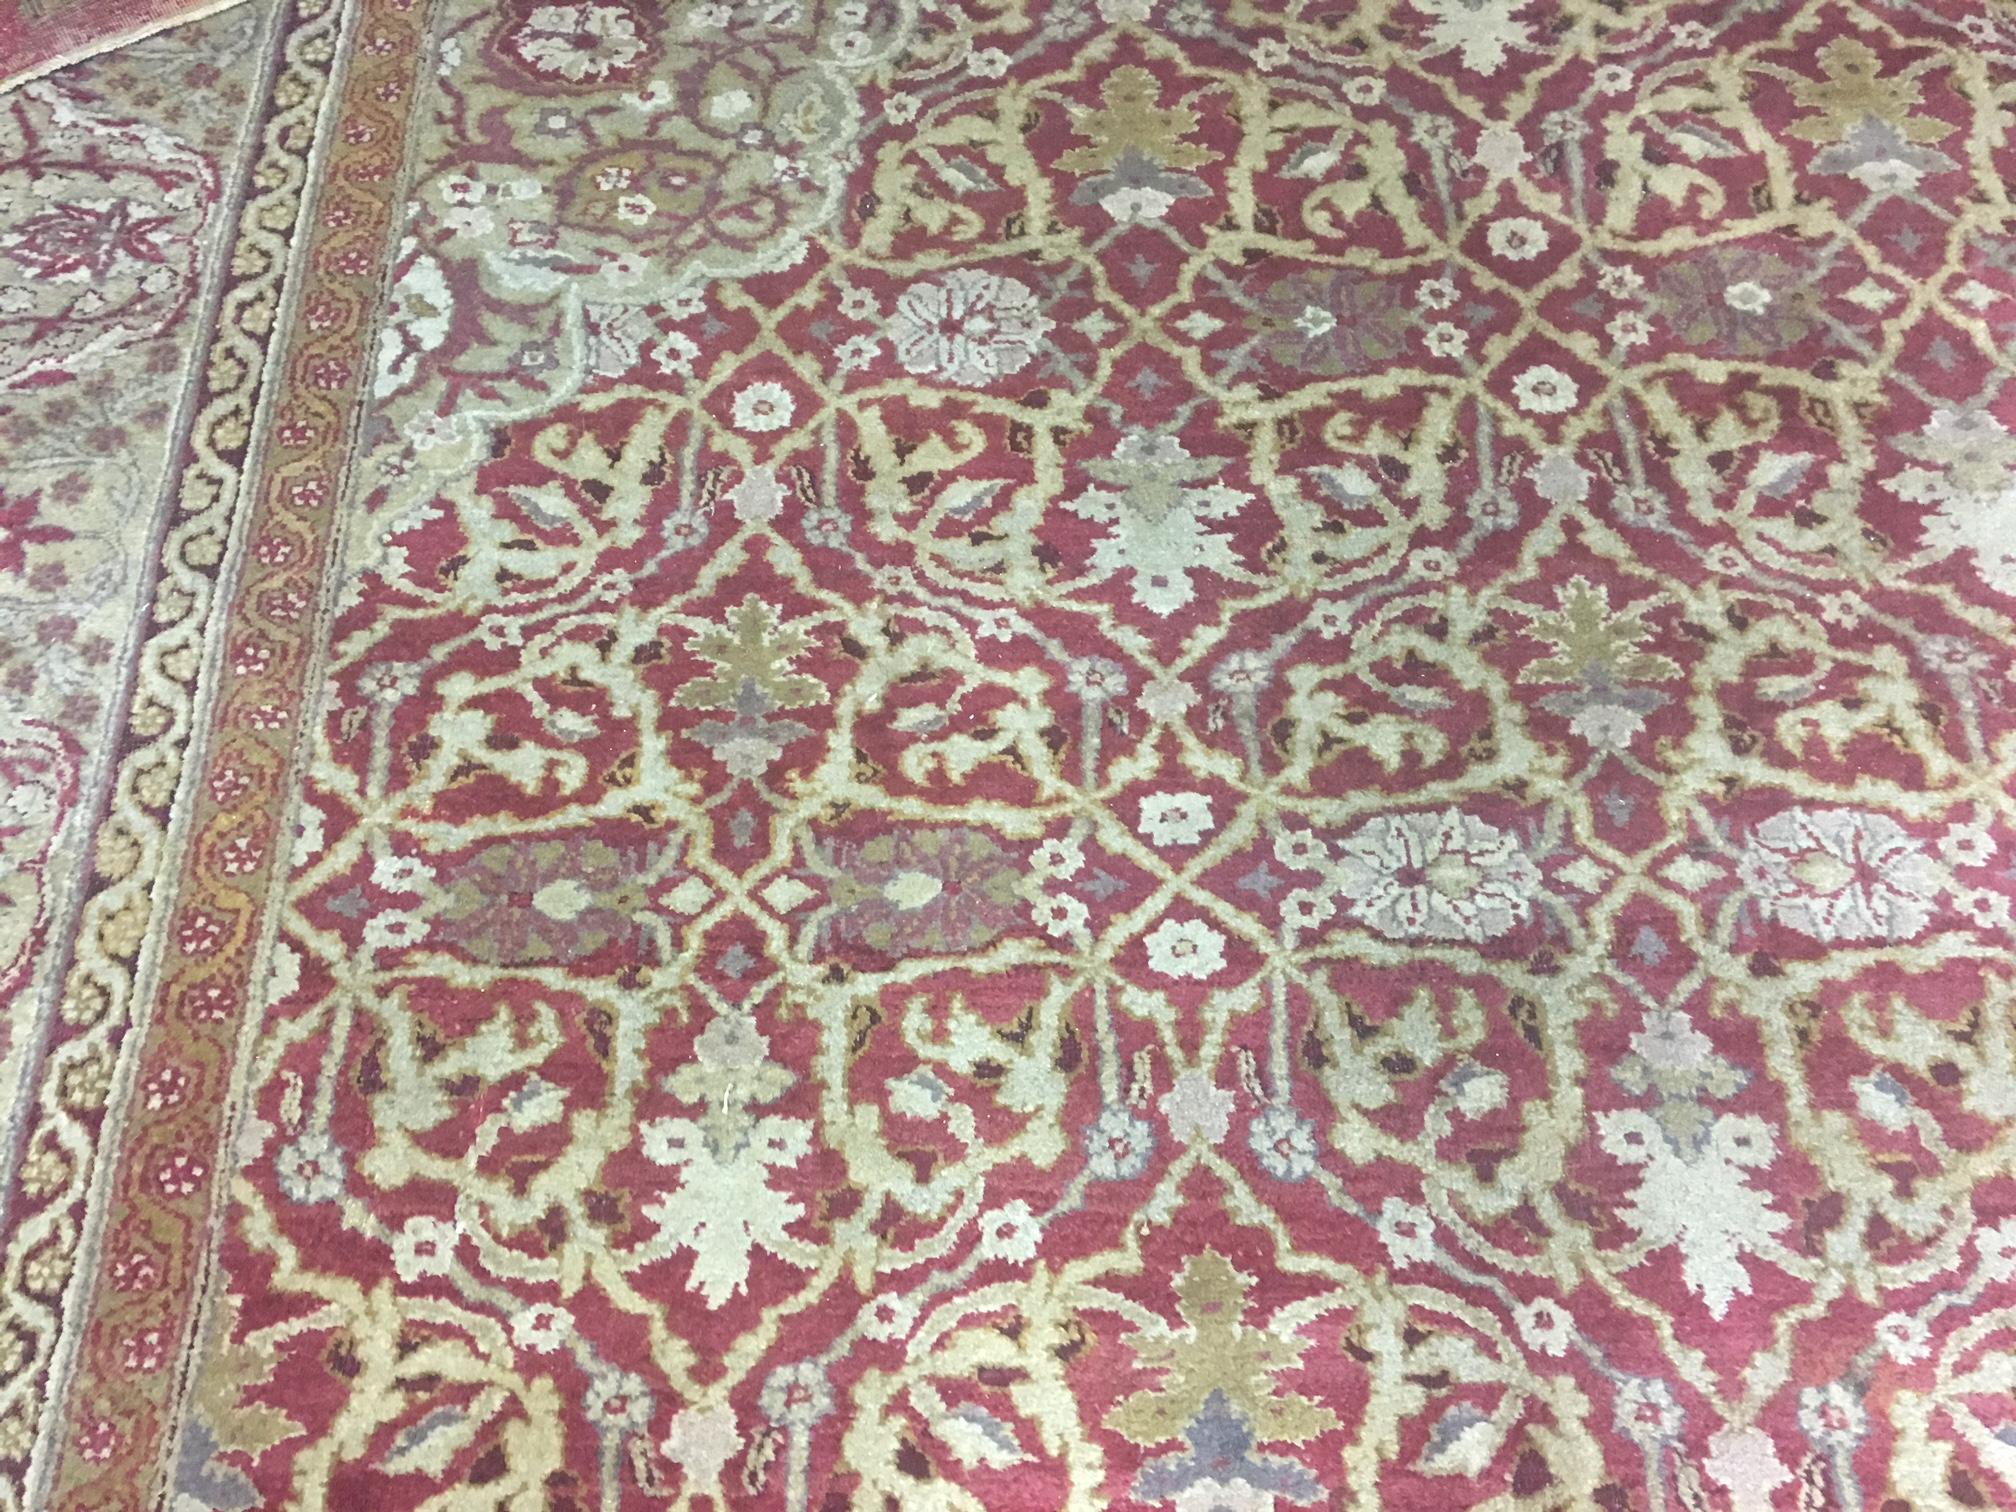 19th Century Antique Indian Agra Carpet For Sale